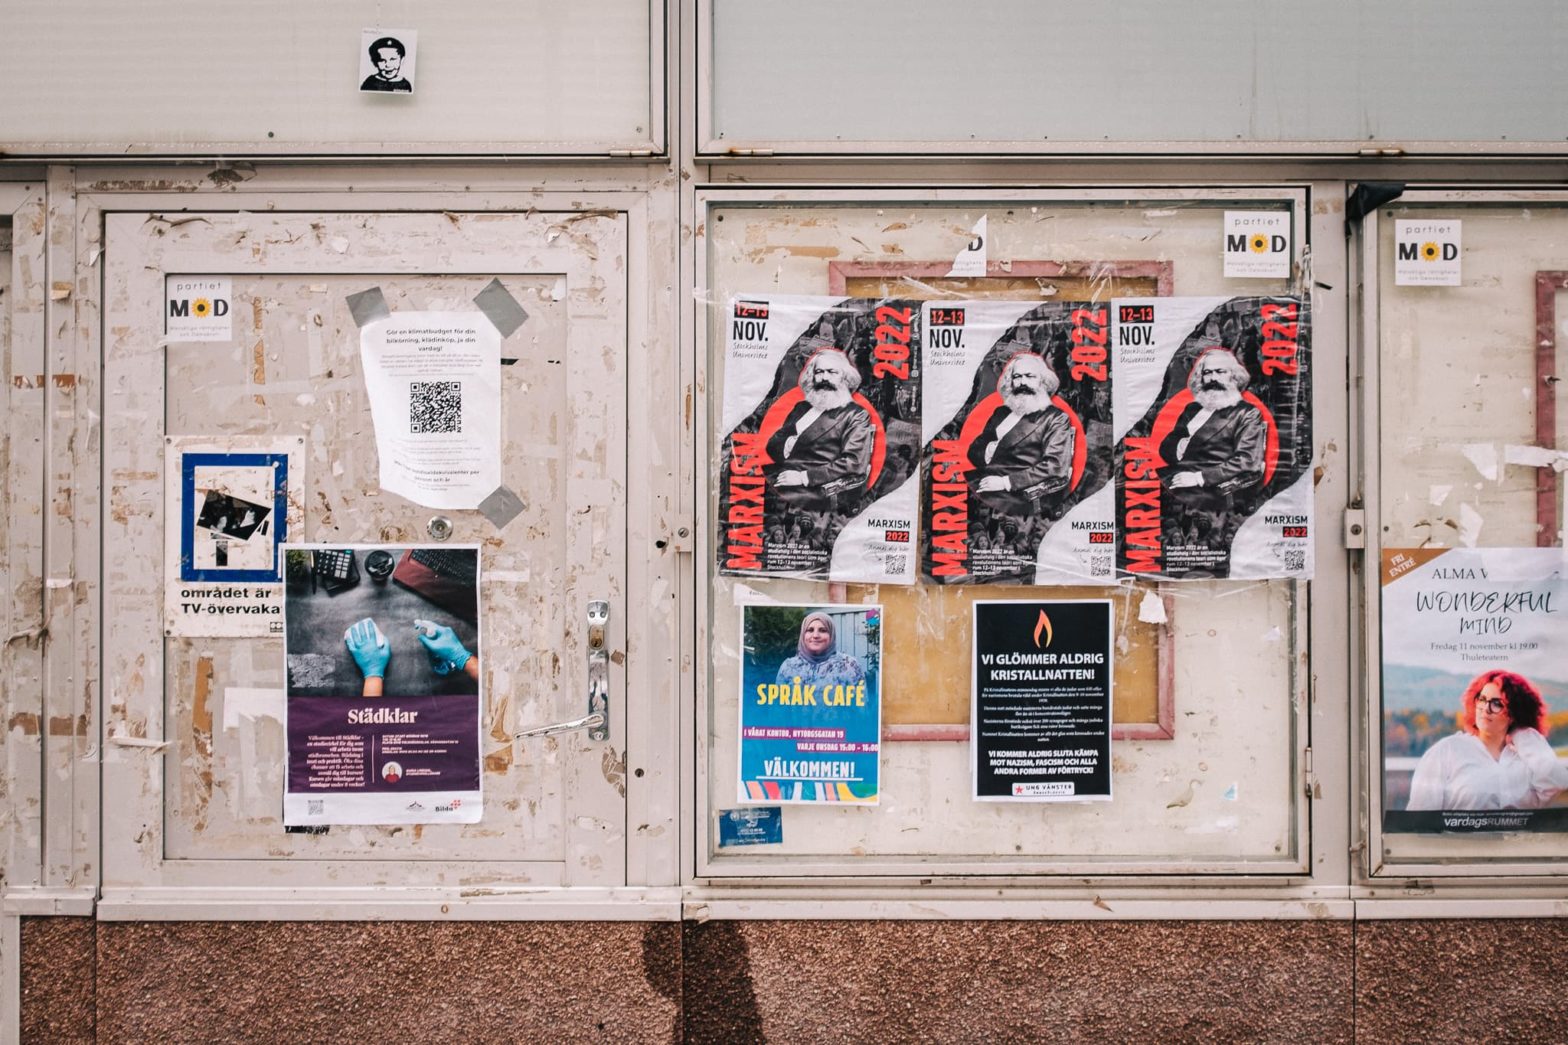 Ripped posters on a wall in Örnsköldsvik